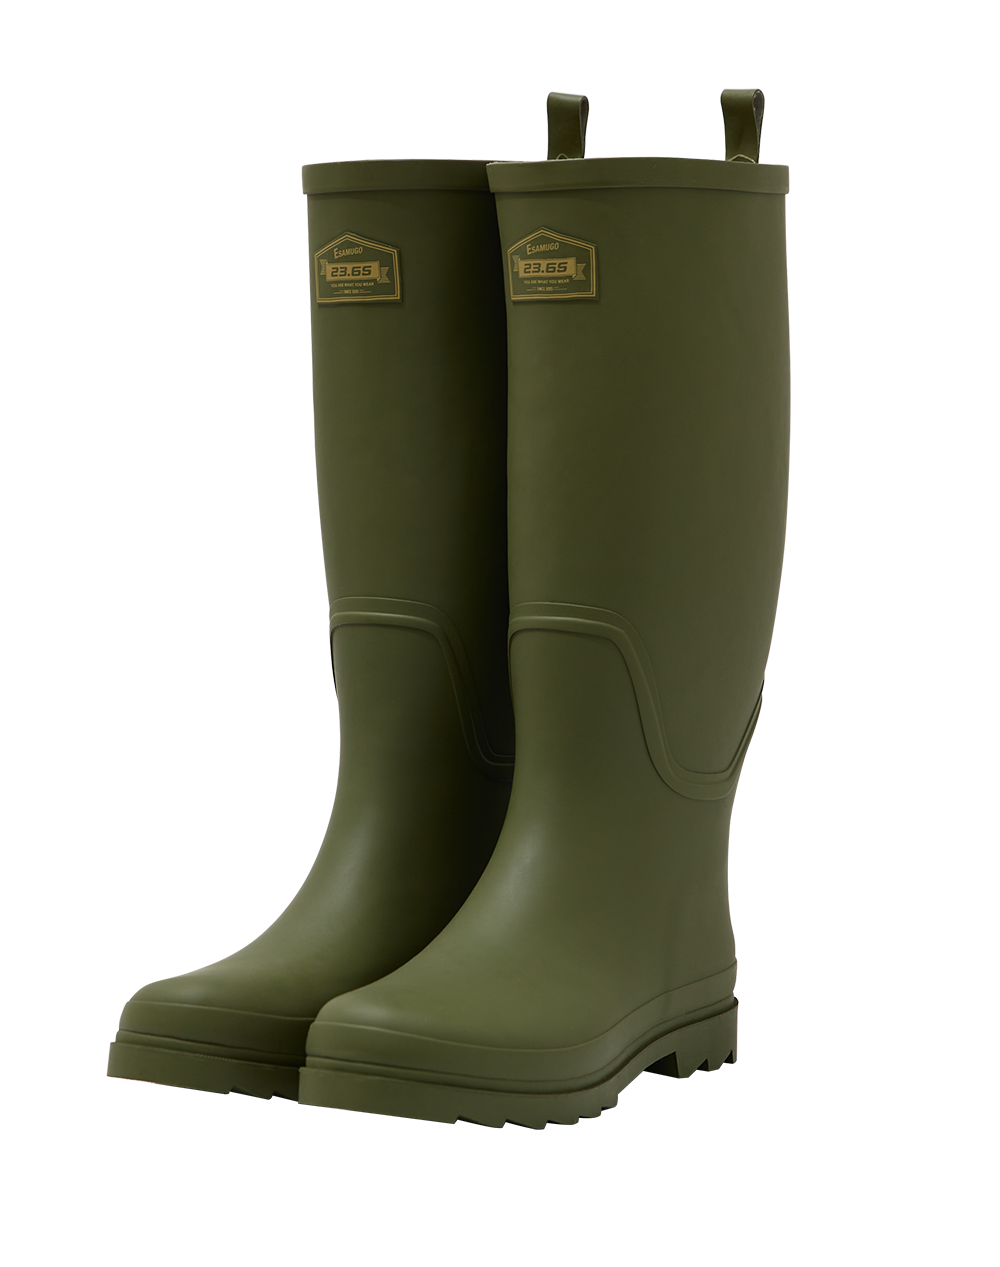 23.65 Rain Boots 長筒橄欖綠雨靴